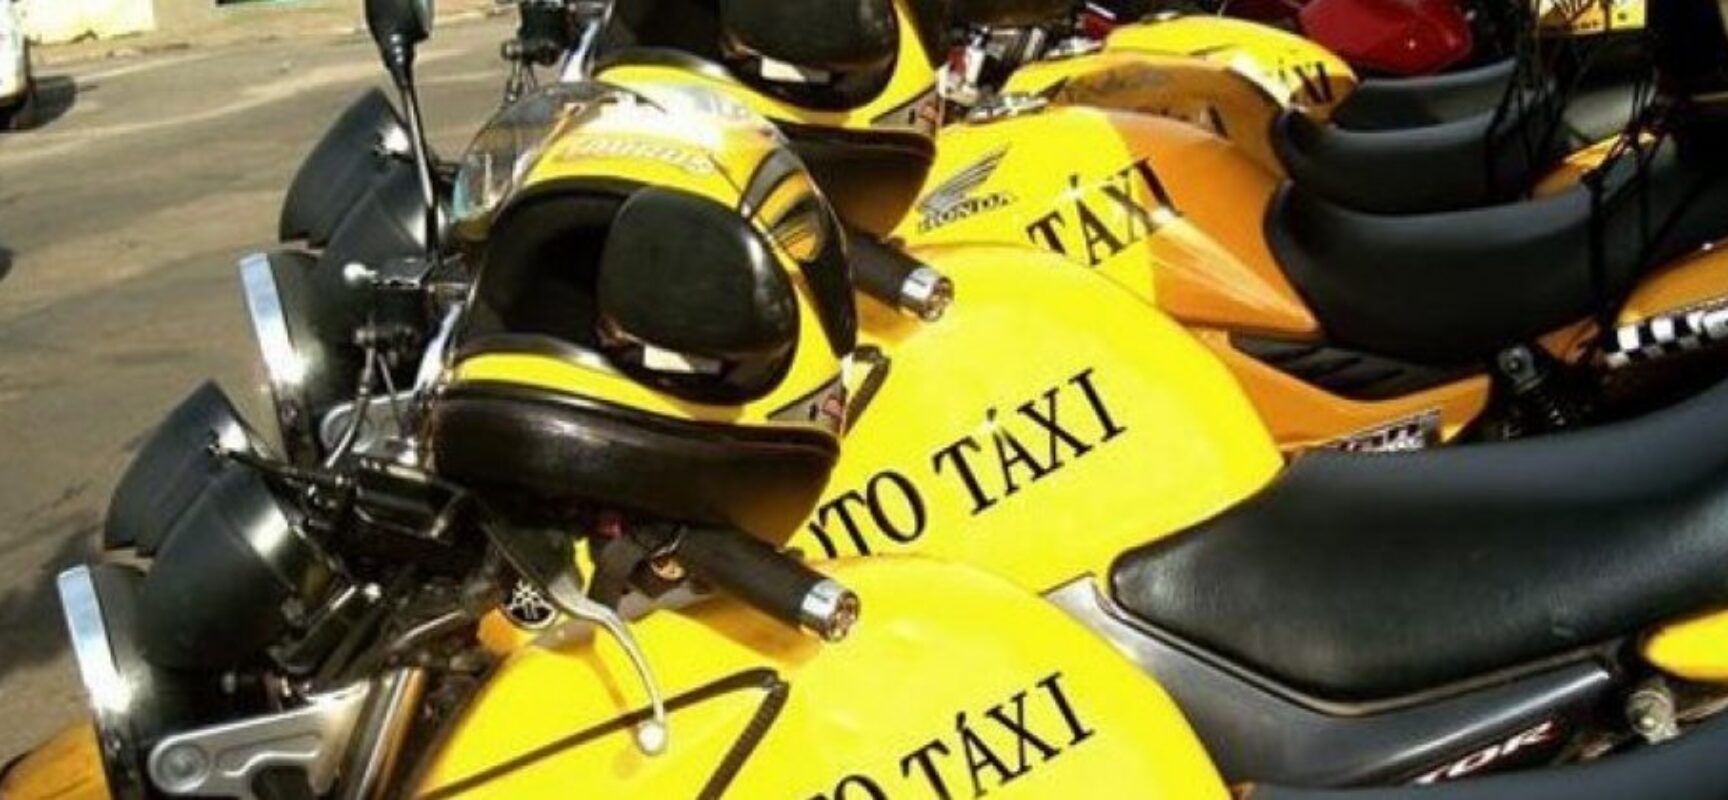 Prefeitura de Itabuna inova com a entrega de alvarás nos pontos de táxi e mototáxis